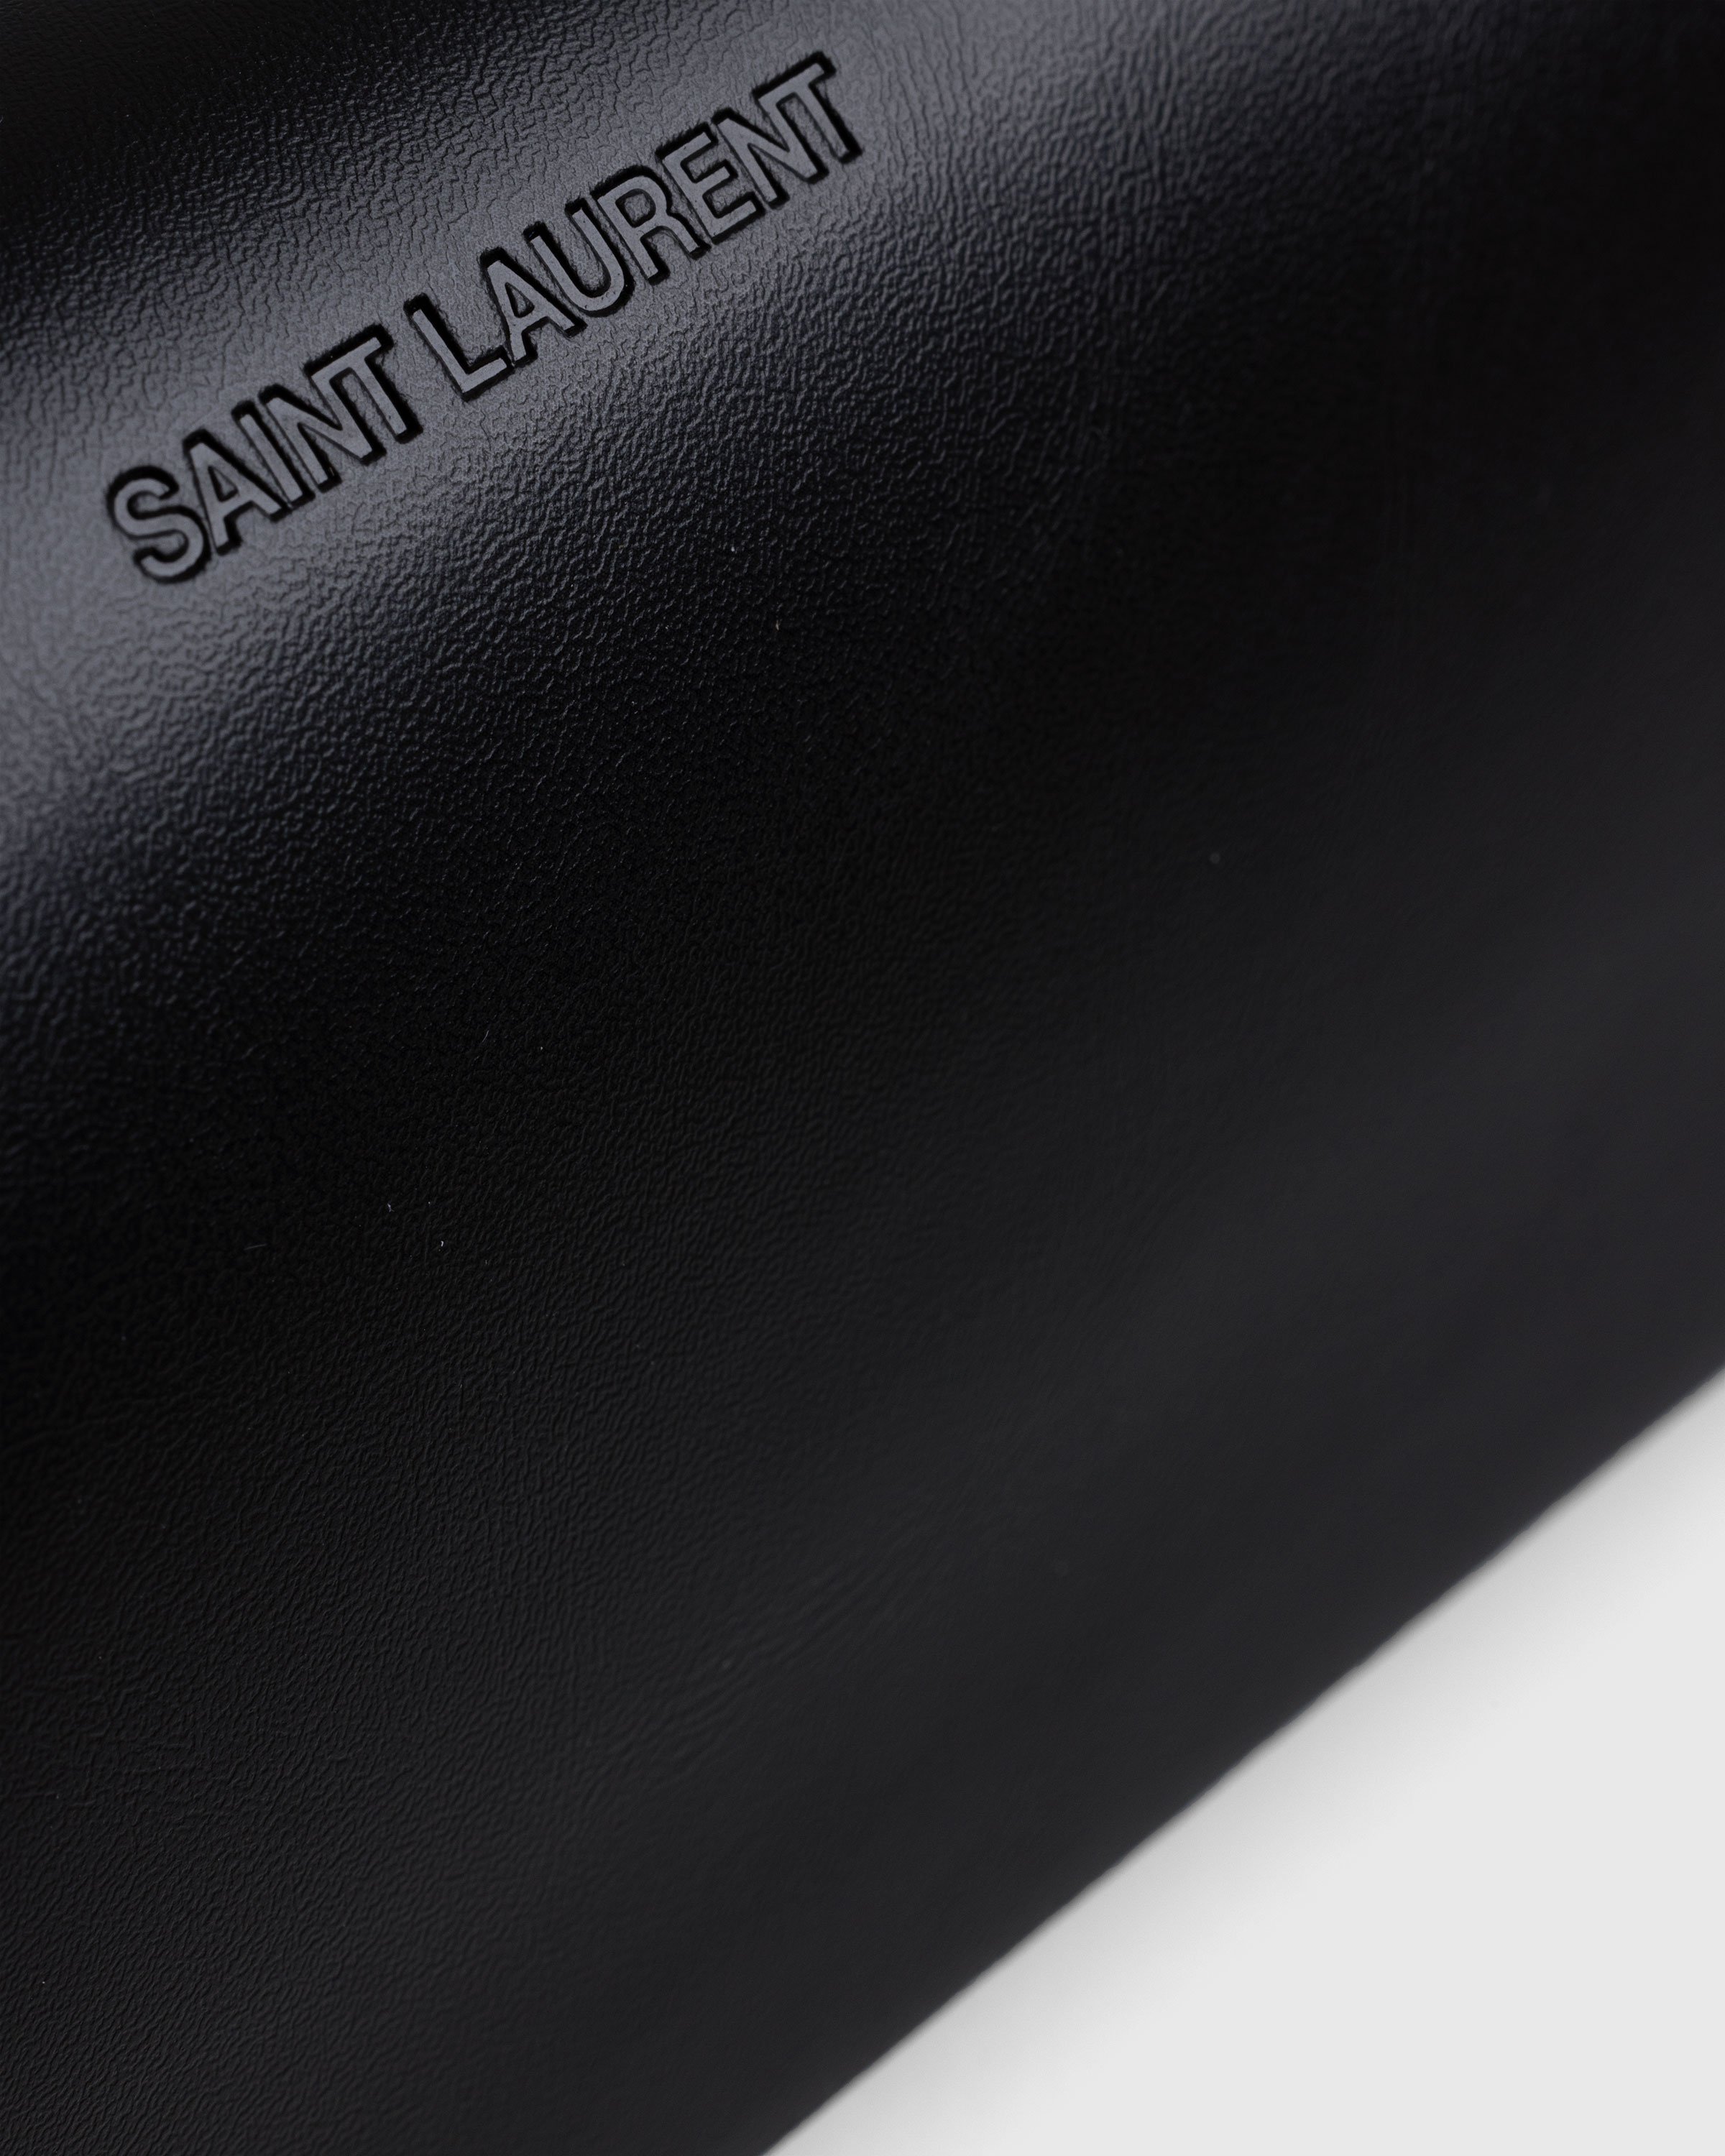 Saint Laurent - SL 571 Round Frame Sunglasses Black - Accessories - Black - Image 6